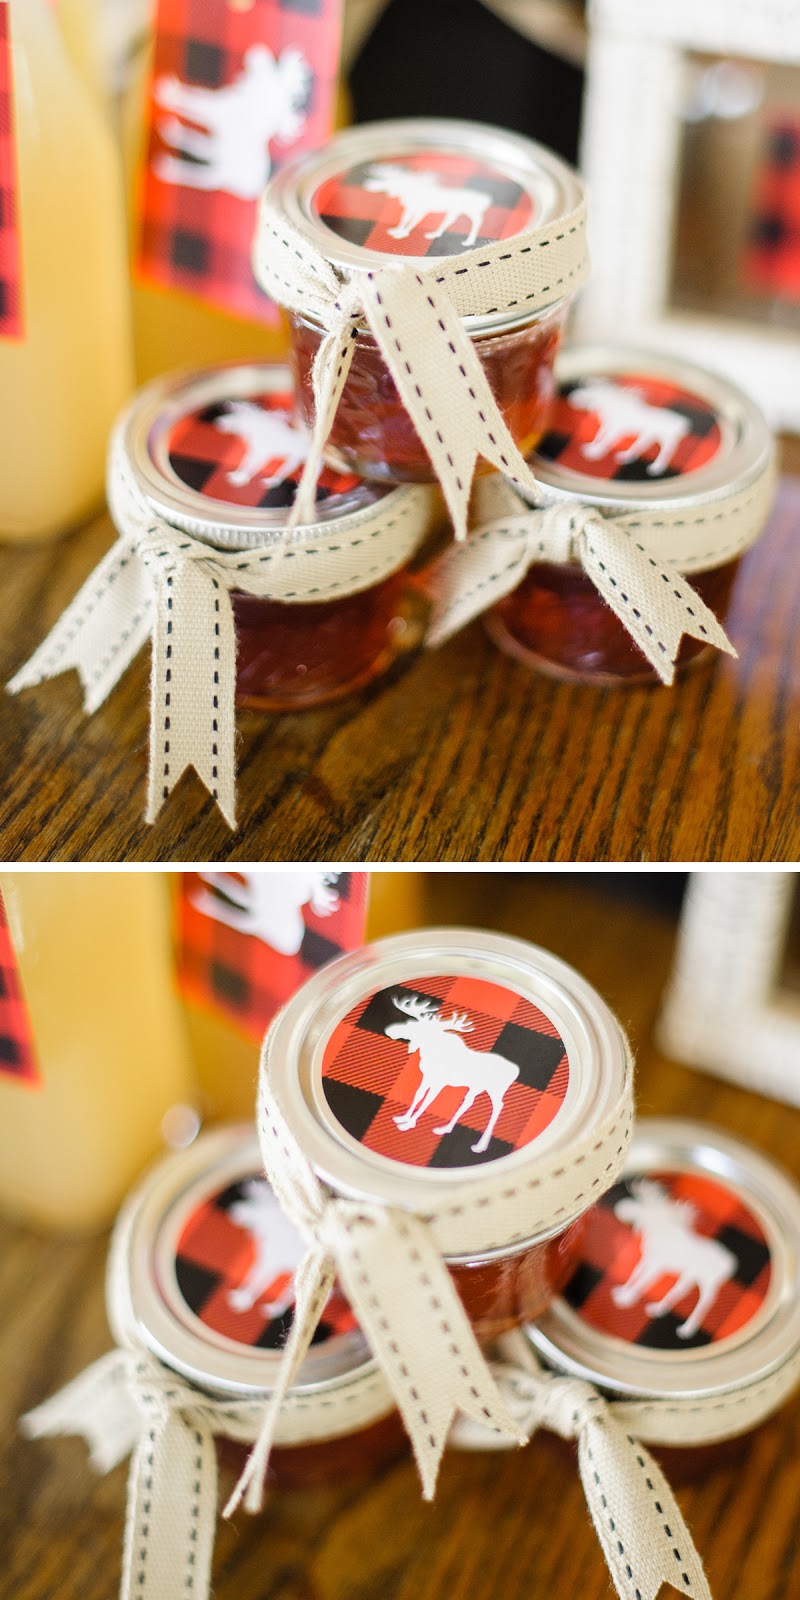 homemade gifts in jars | creativebag.com